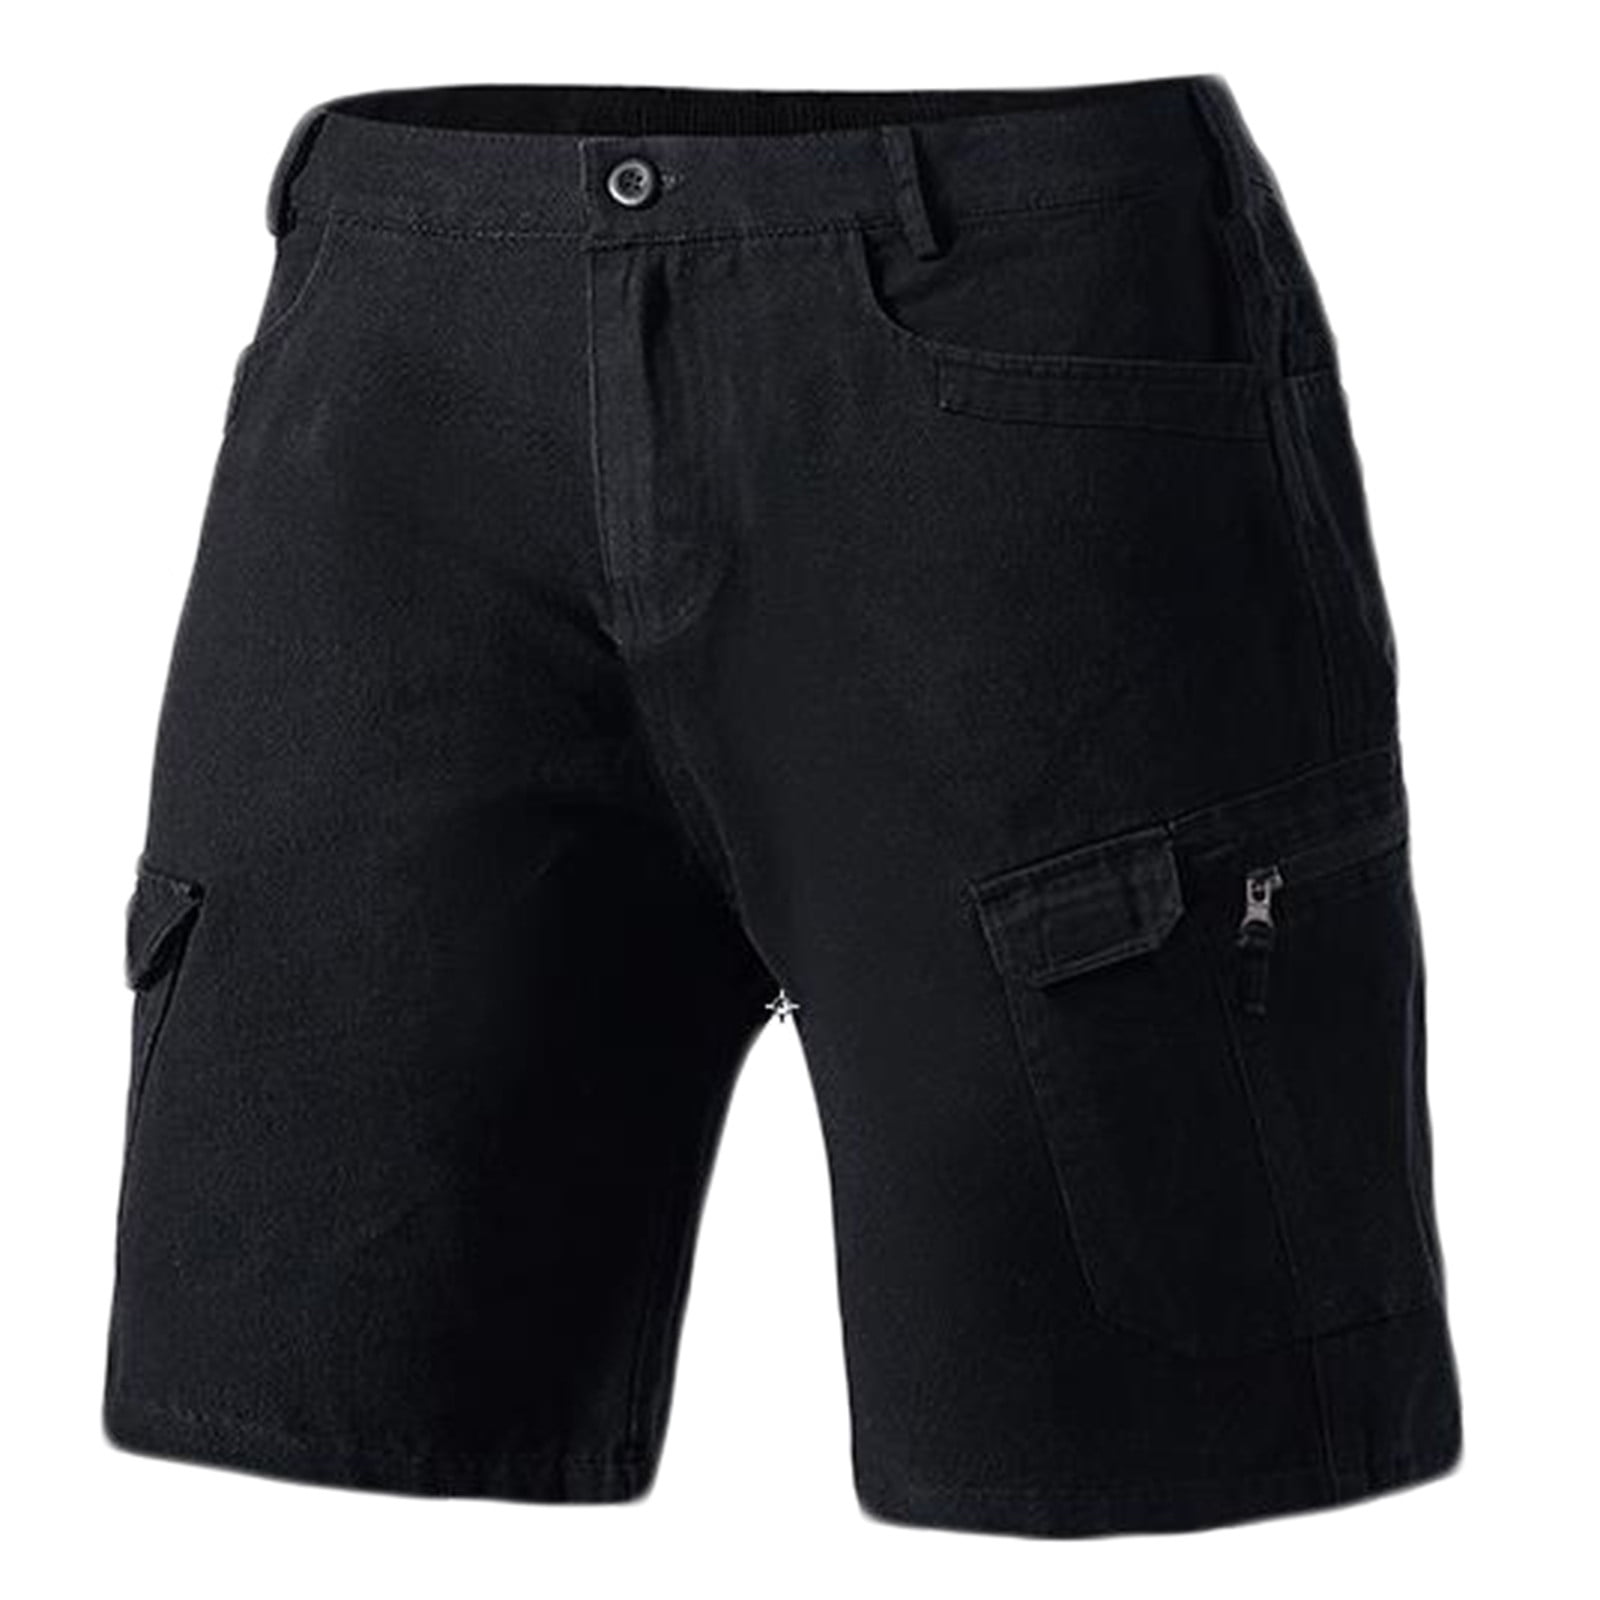 Hvyesh Mens Camo Cargo Shorts Plus Size Multi Pockets Shorts Work ...